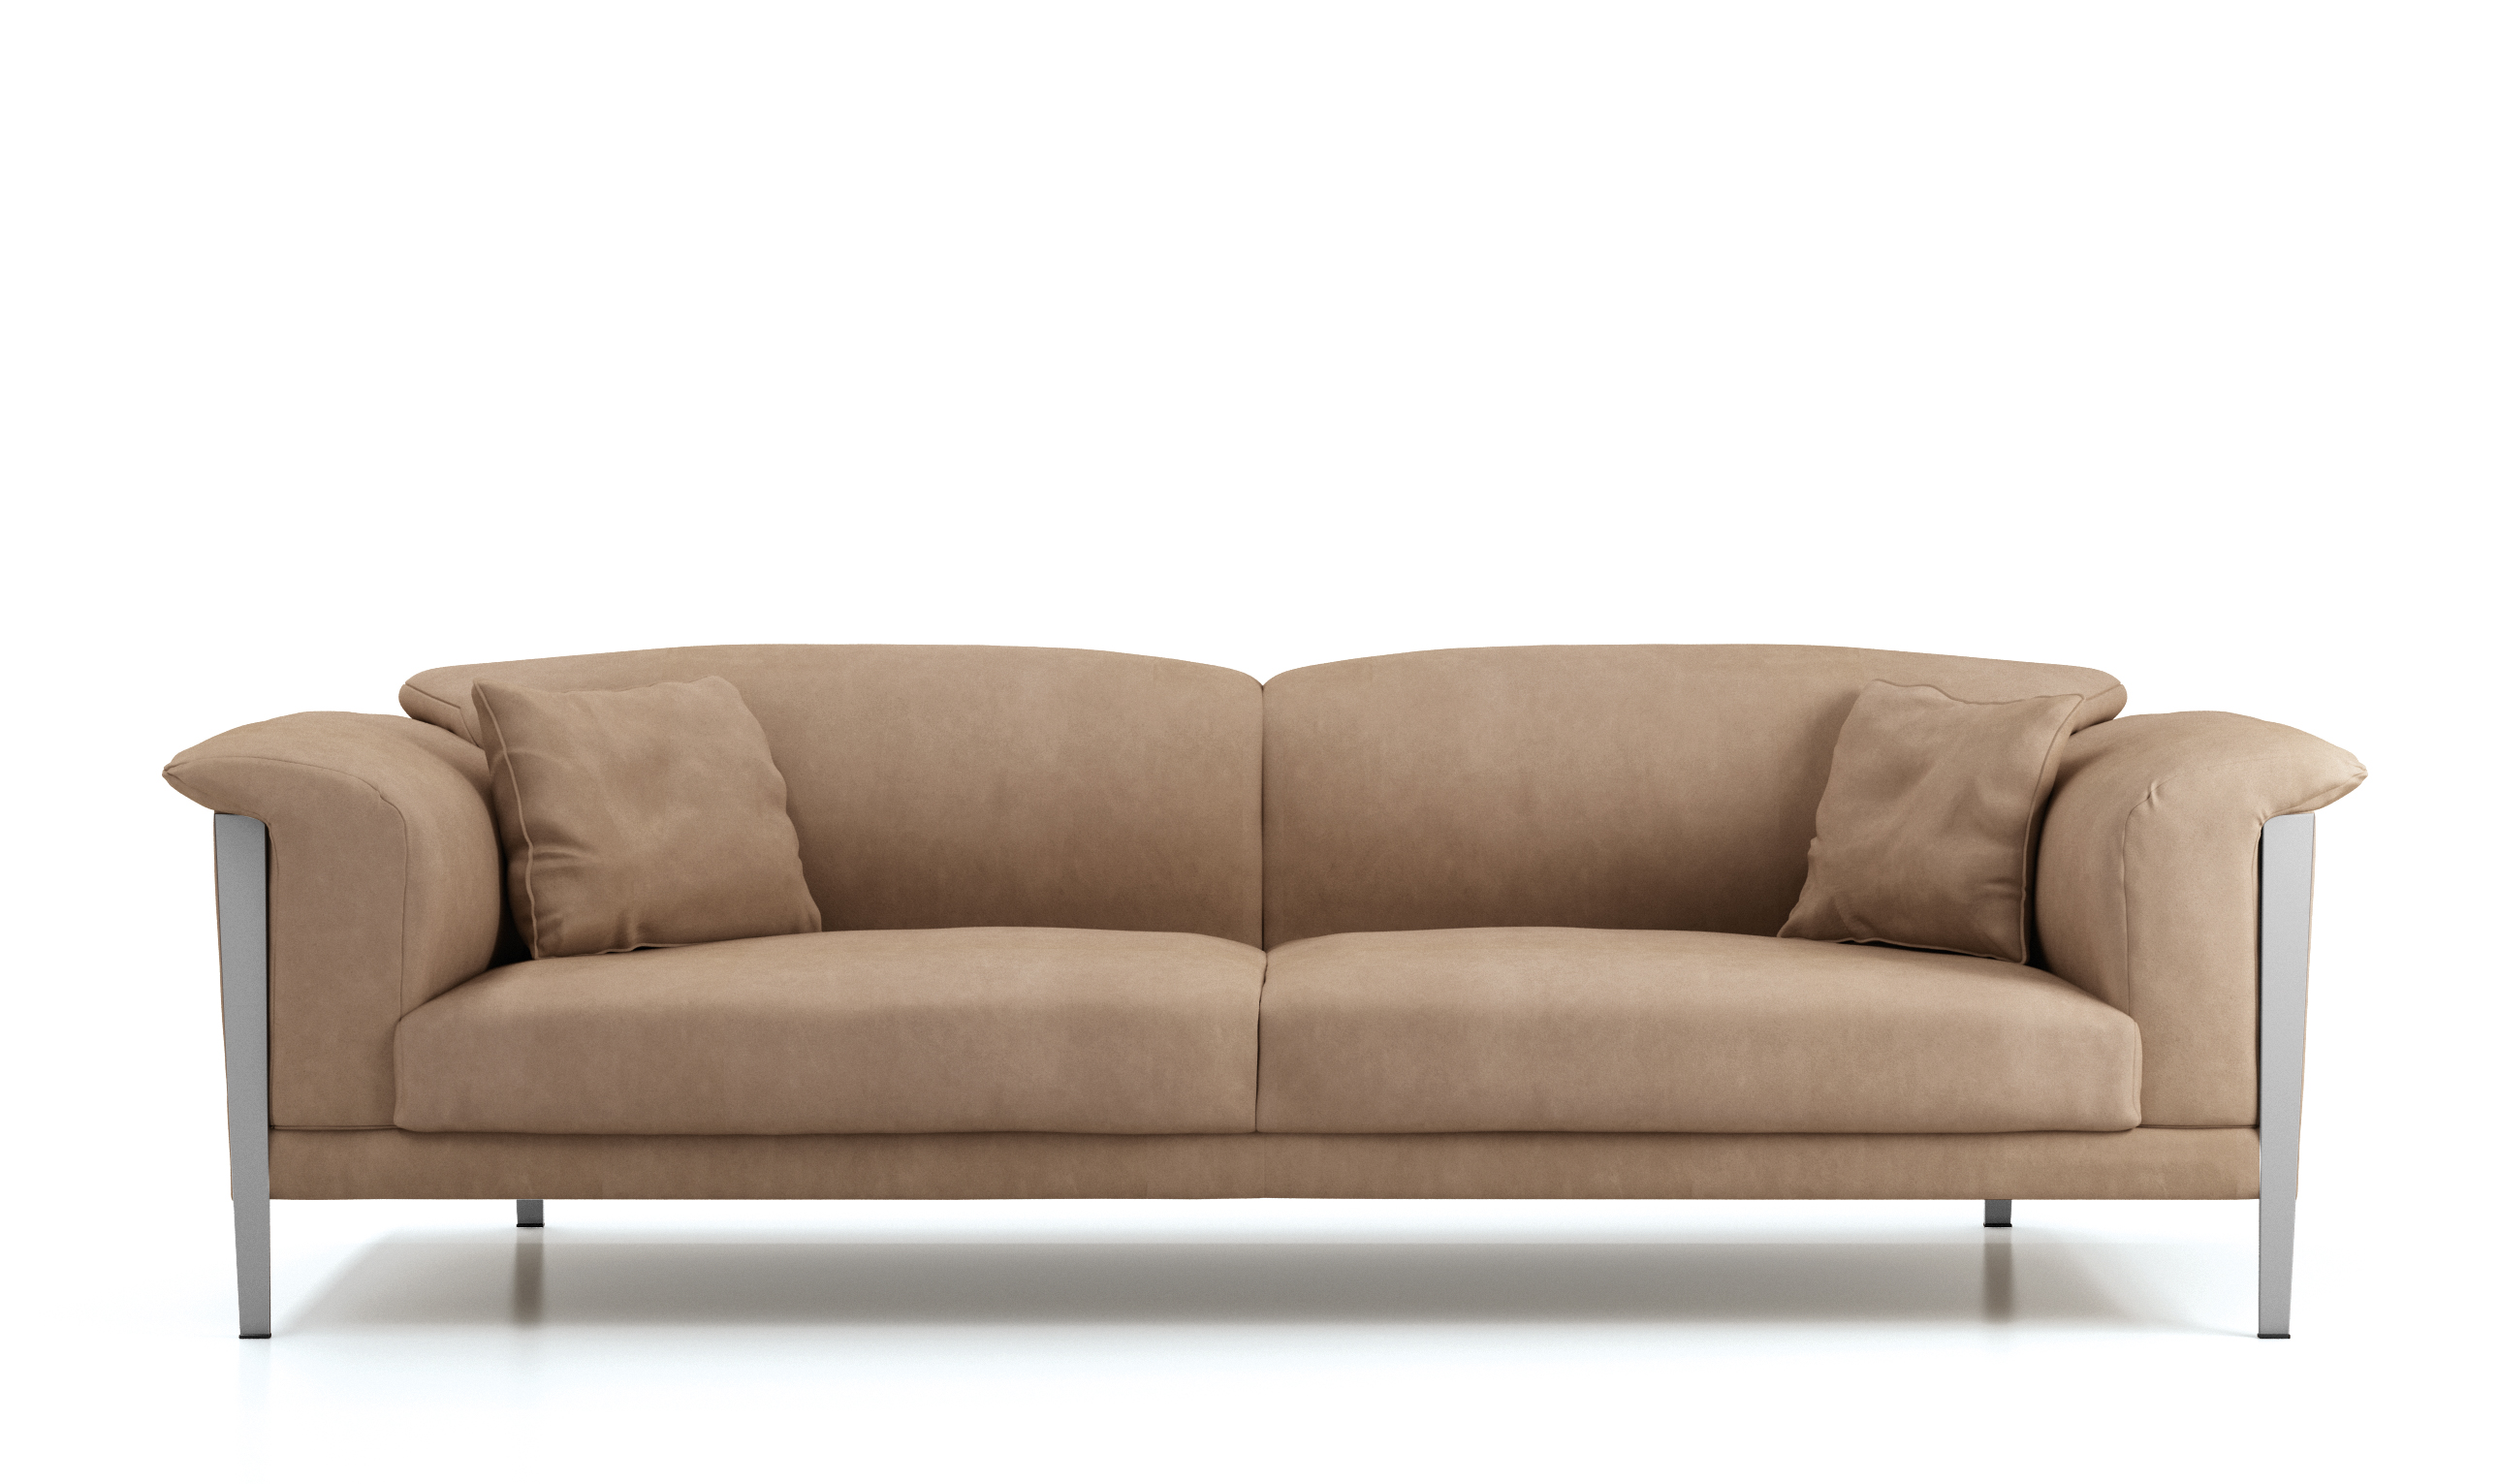 cream leather sofa with grey walls